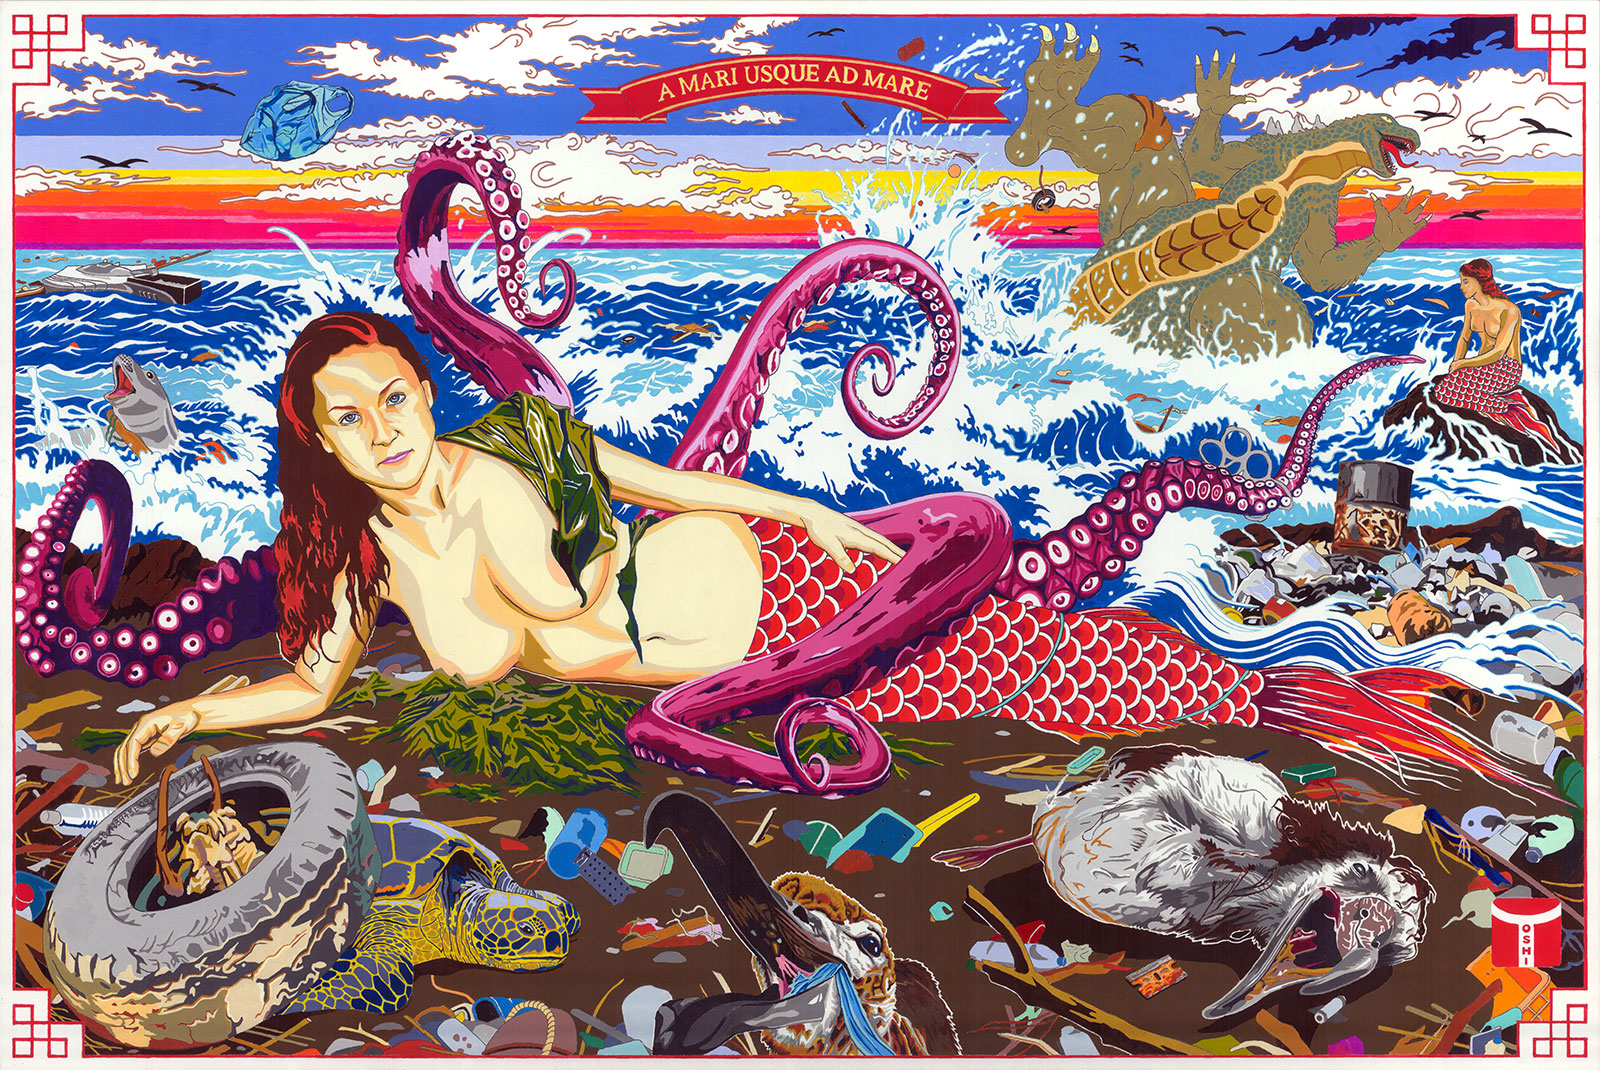 painting of mermaid amid beach trash and dead wildlife